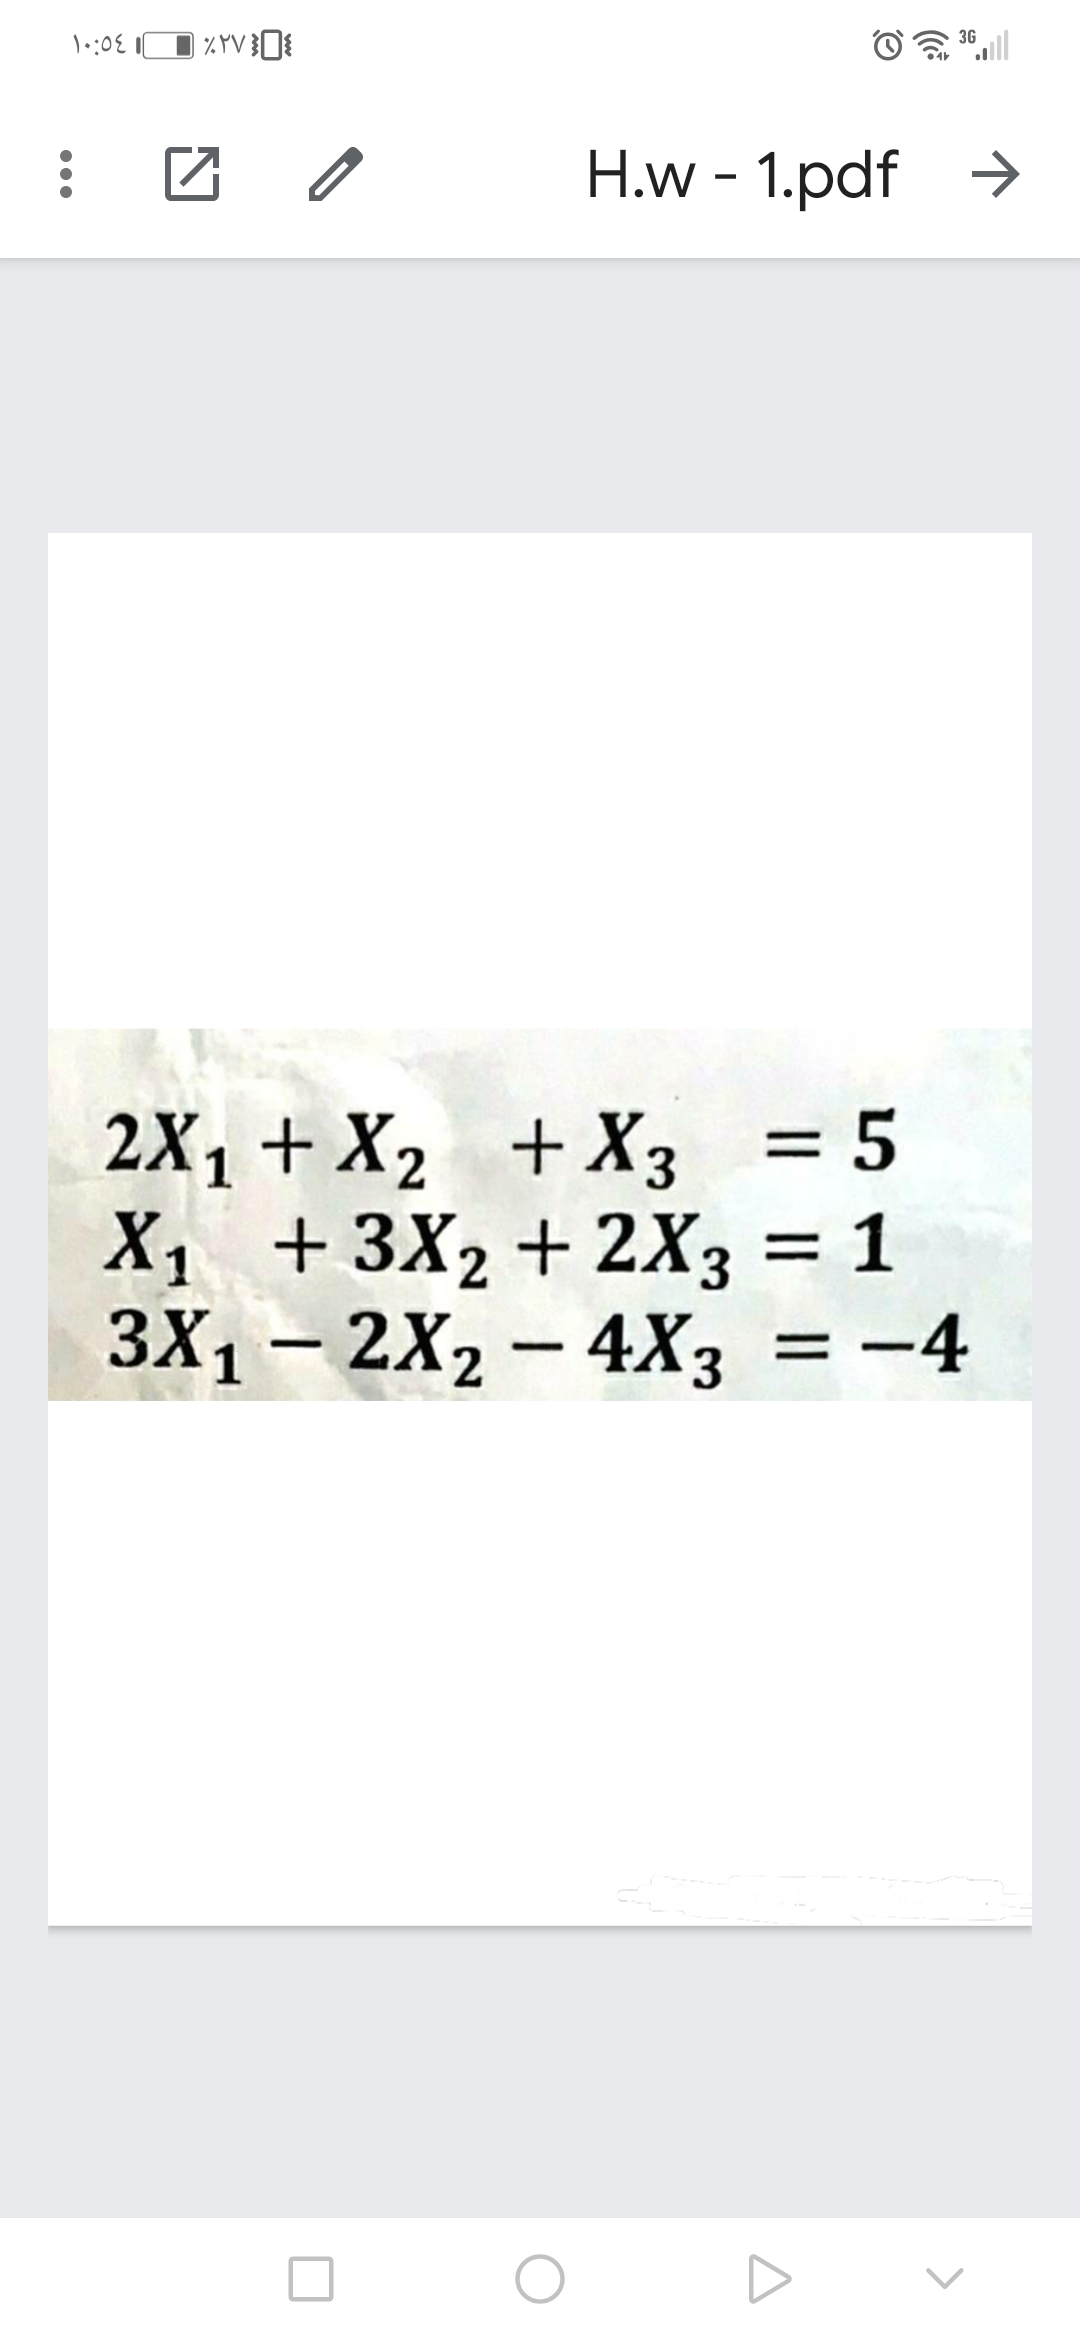 H.w - 1.pdf →>
2X1 + X2 +X3
= 5
X, +3X2 + 2X3 = 1
3X1 – 2X2 – 4X3 = -4
%3D
|
